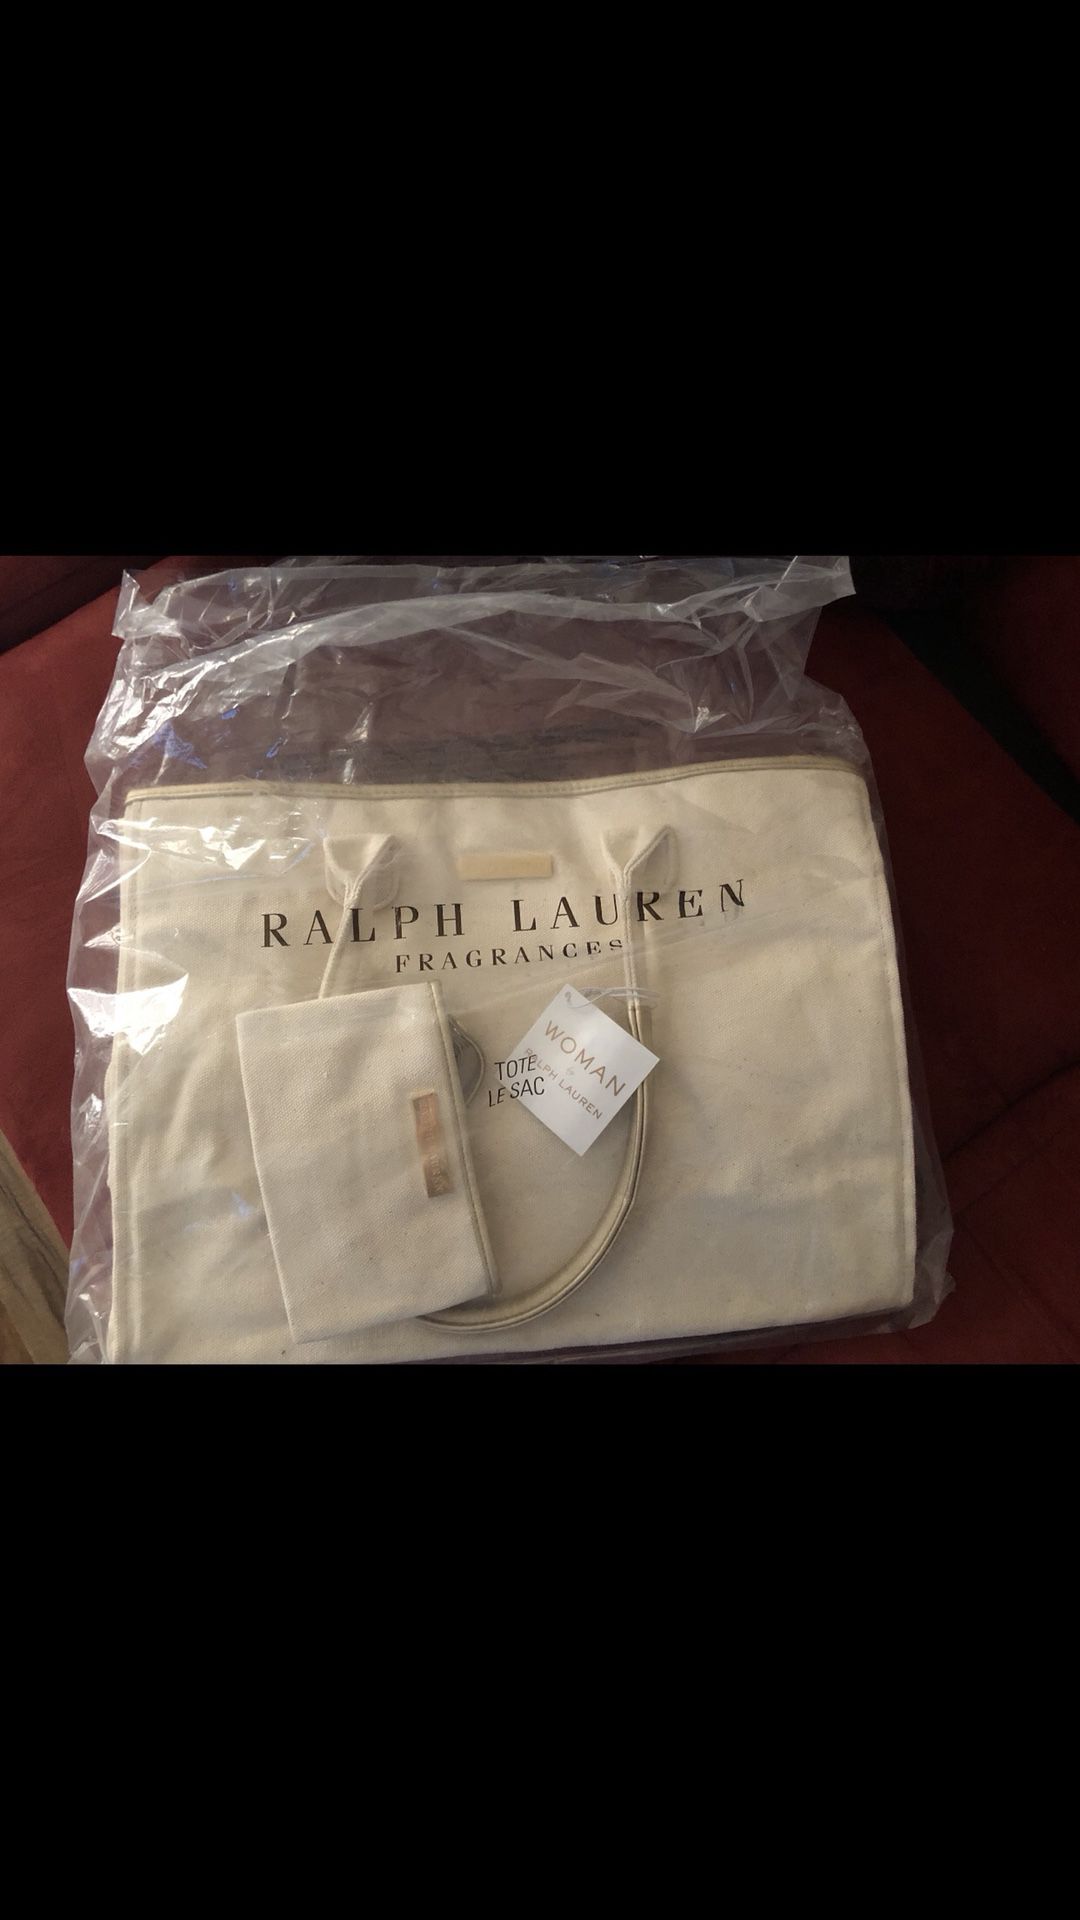 Brand new Ralph Lauren tote bag set